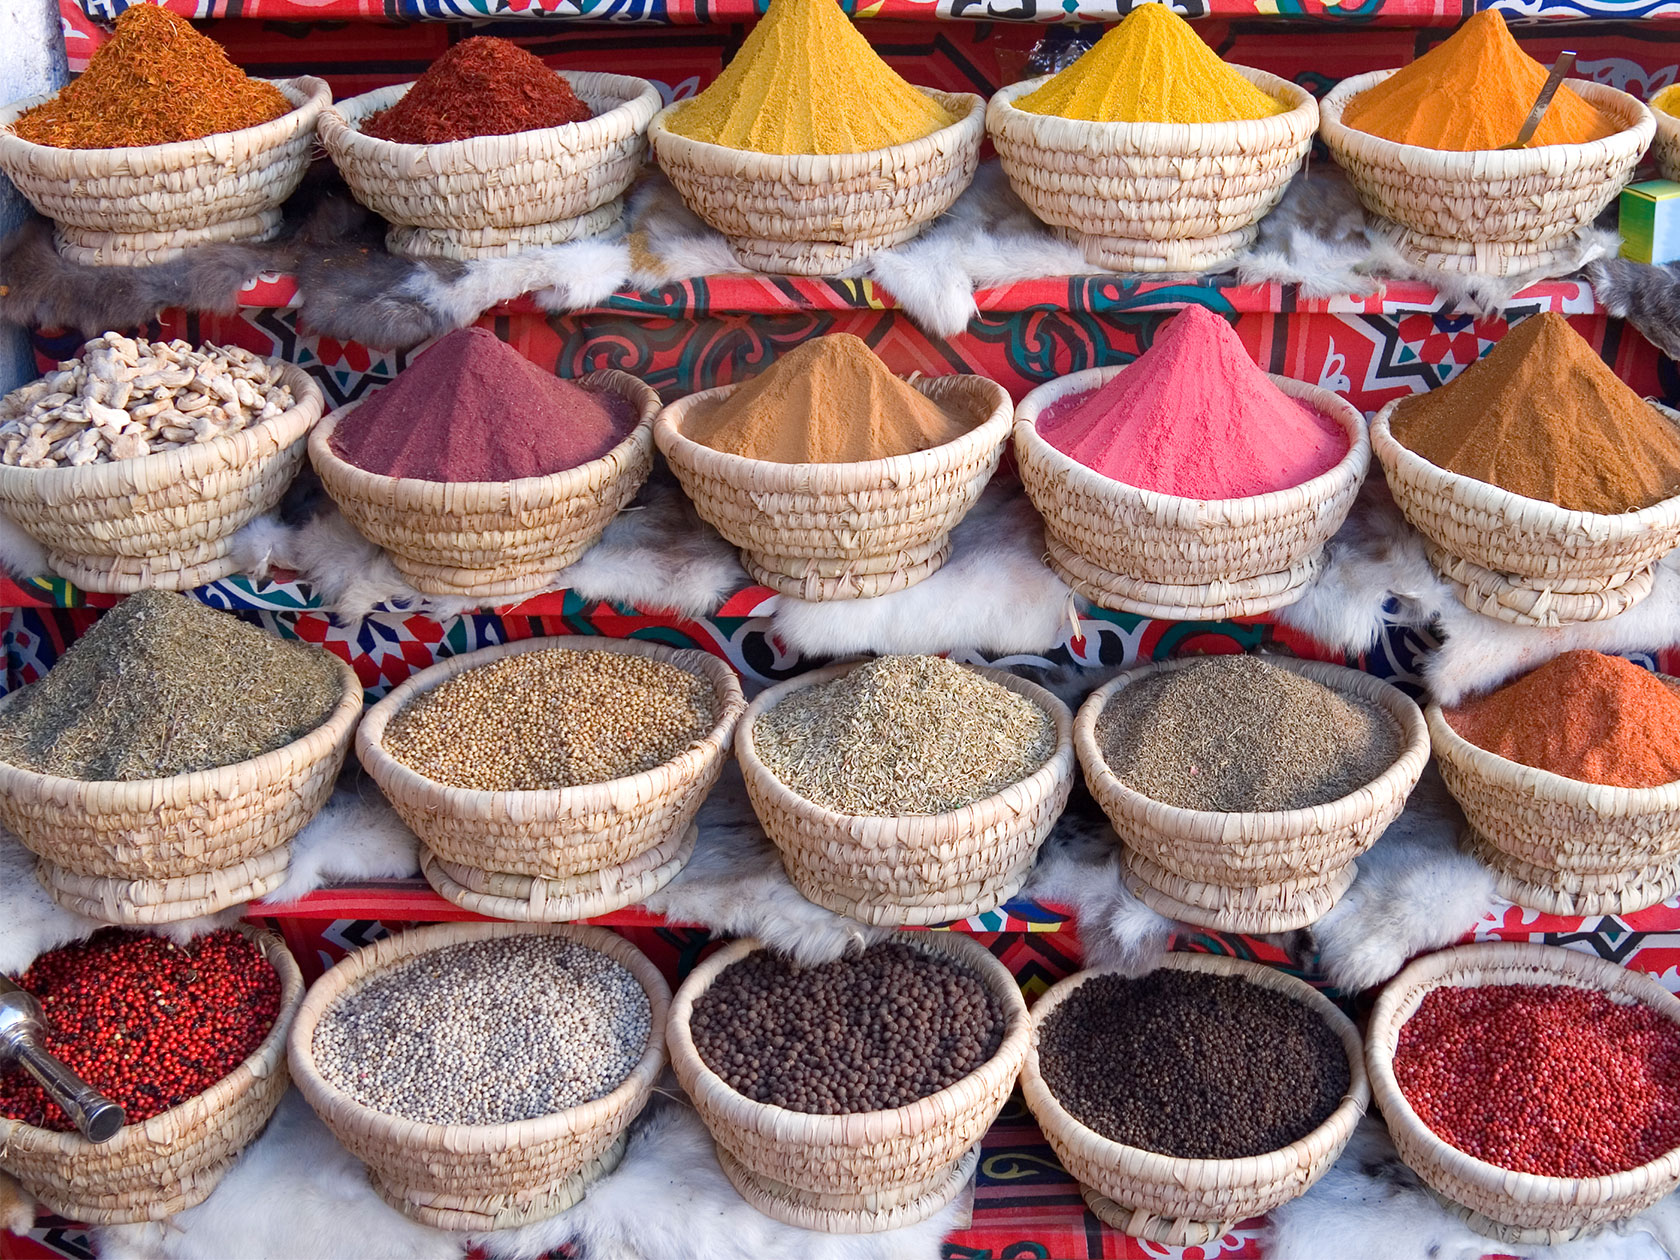 Colourful display of spices, Sharm el Sheik, Egypt.